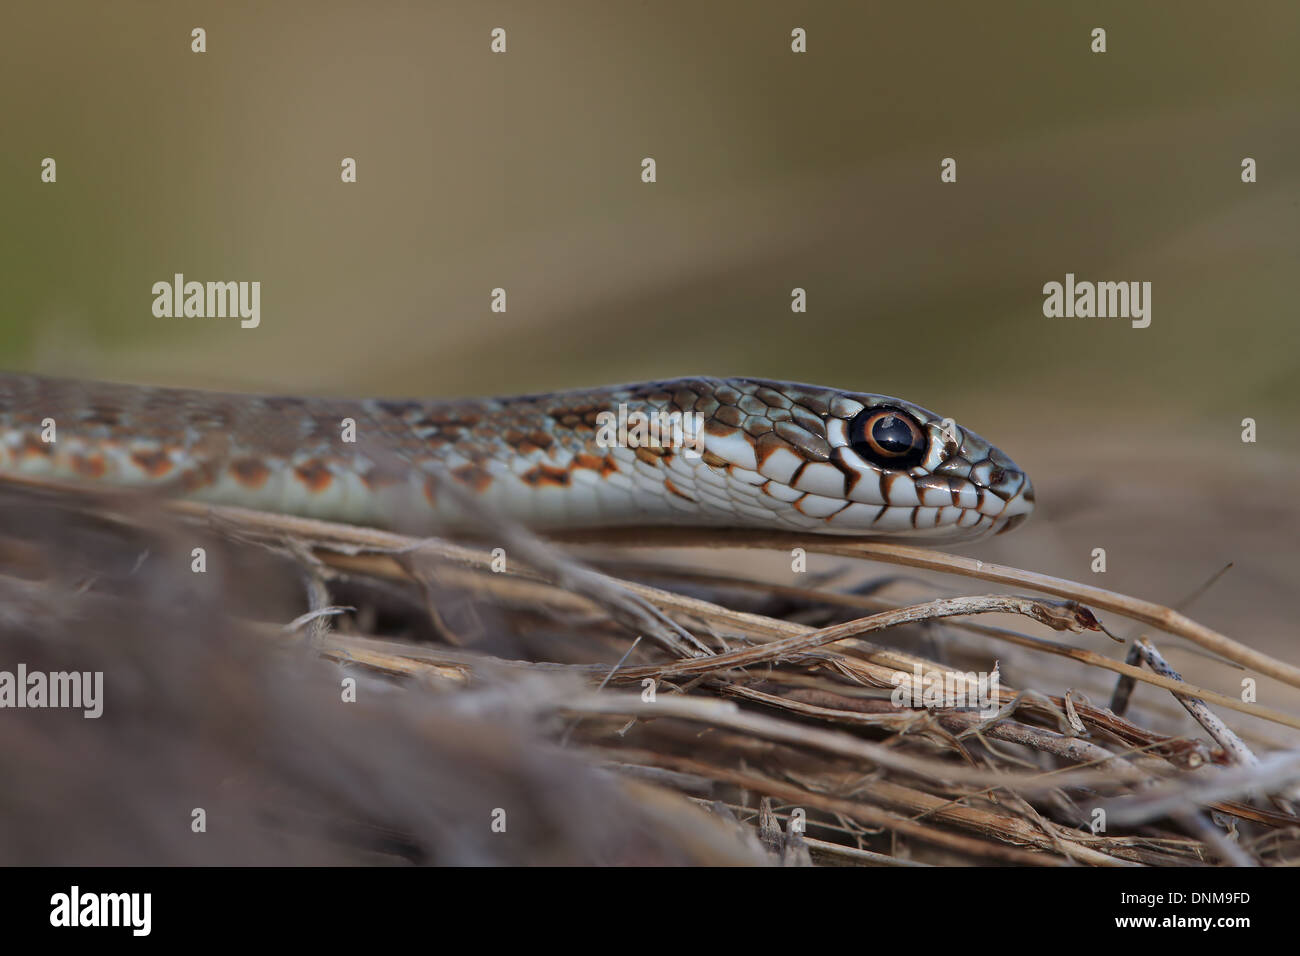 Large Caspian Whip Snake (Dolichophis caspius) Stock Photo